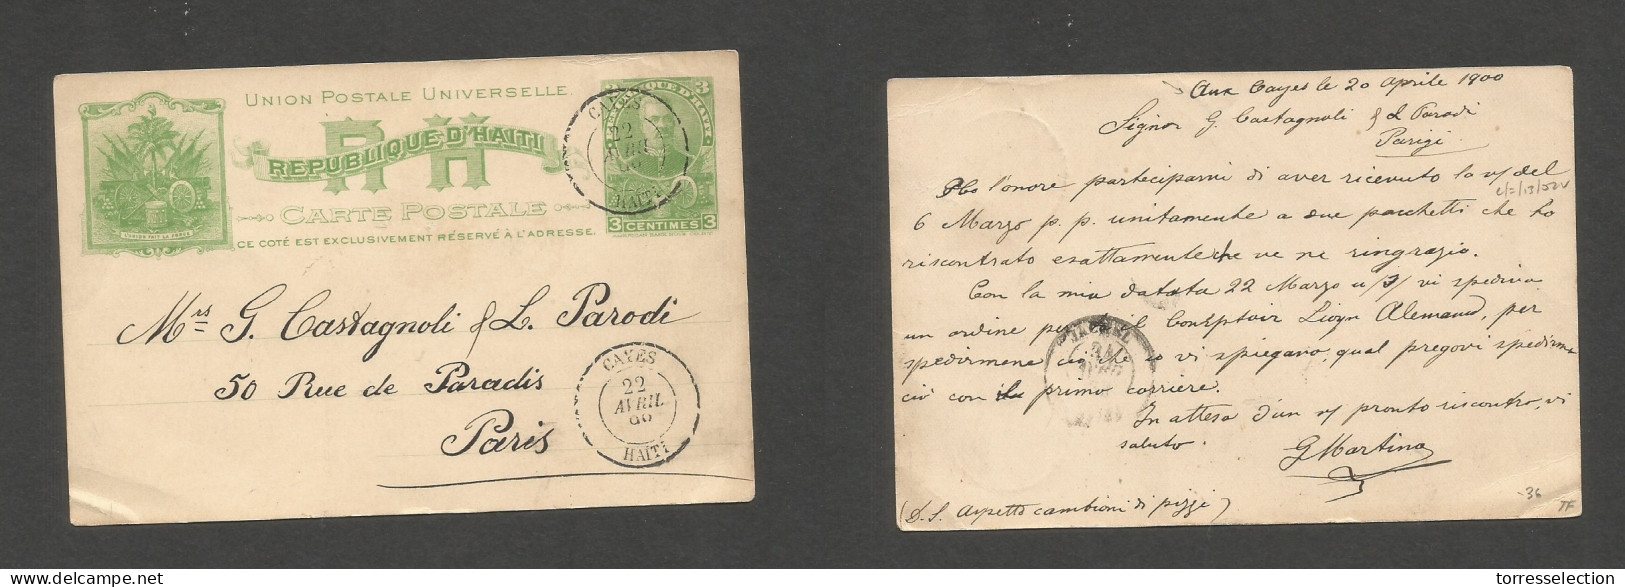 HAITI. 1900 (20 Apr) Aux Cayes - France, Paris. 3c Green Early Stat Card. Fine Used. SALE. - Haïti